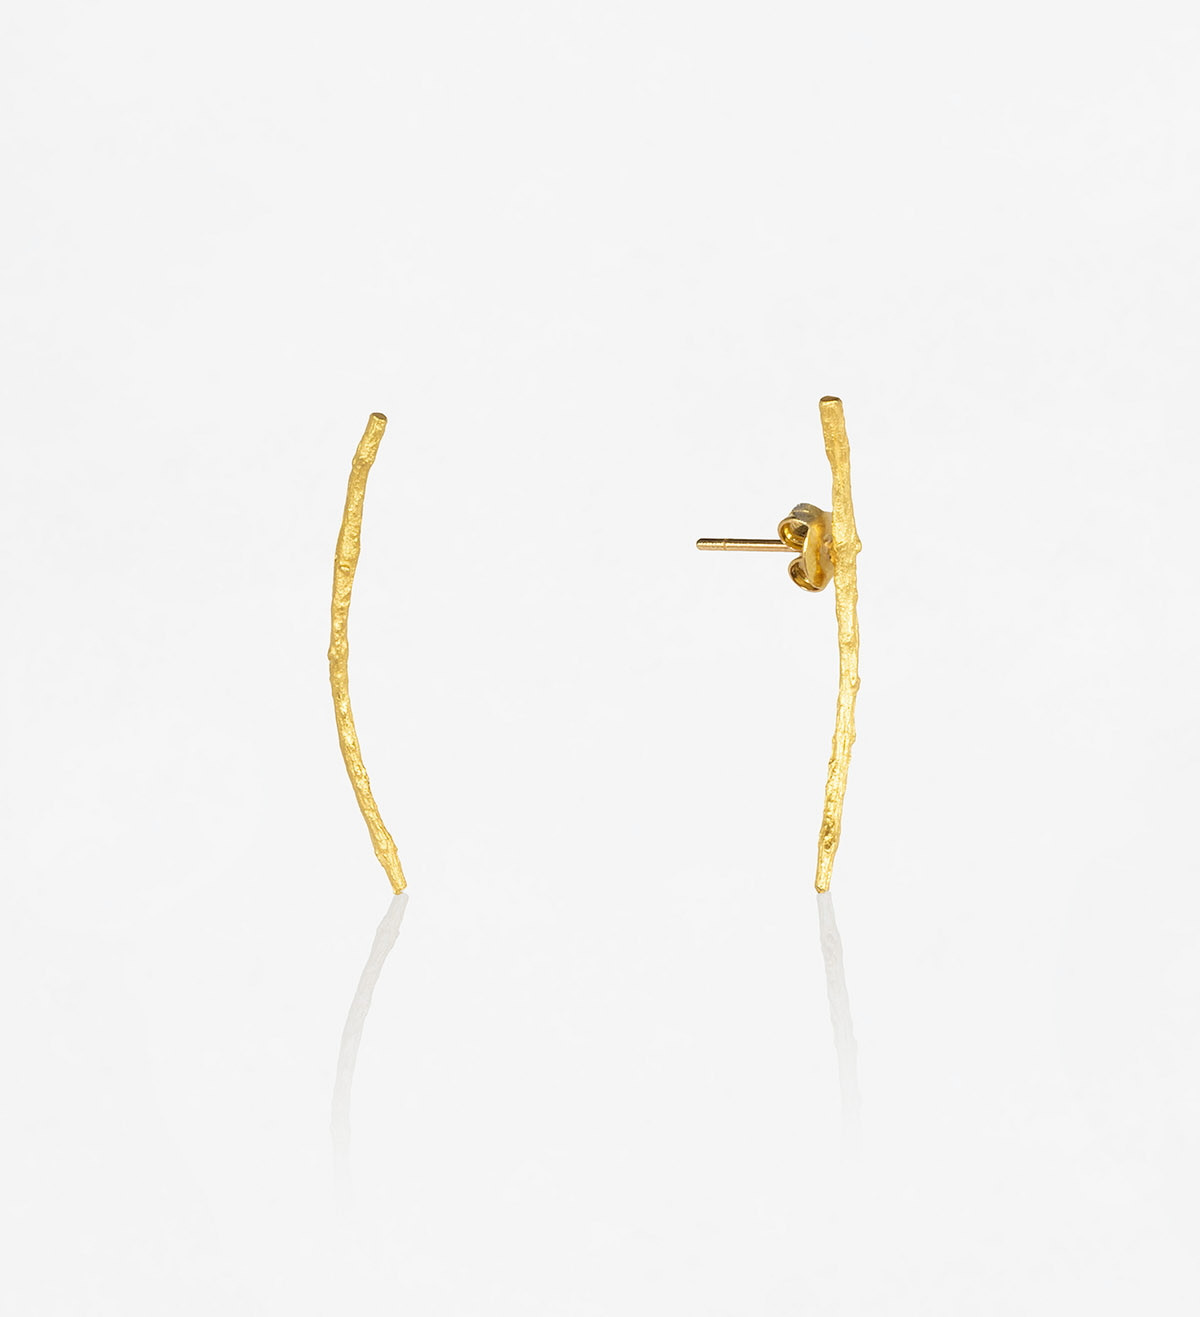 18k gold earrings Romaní 34mm